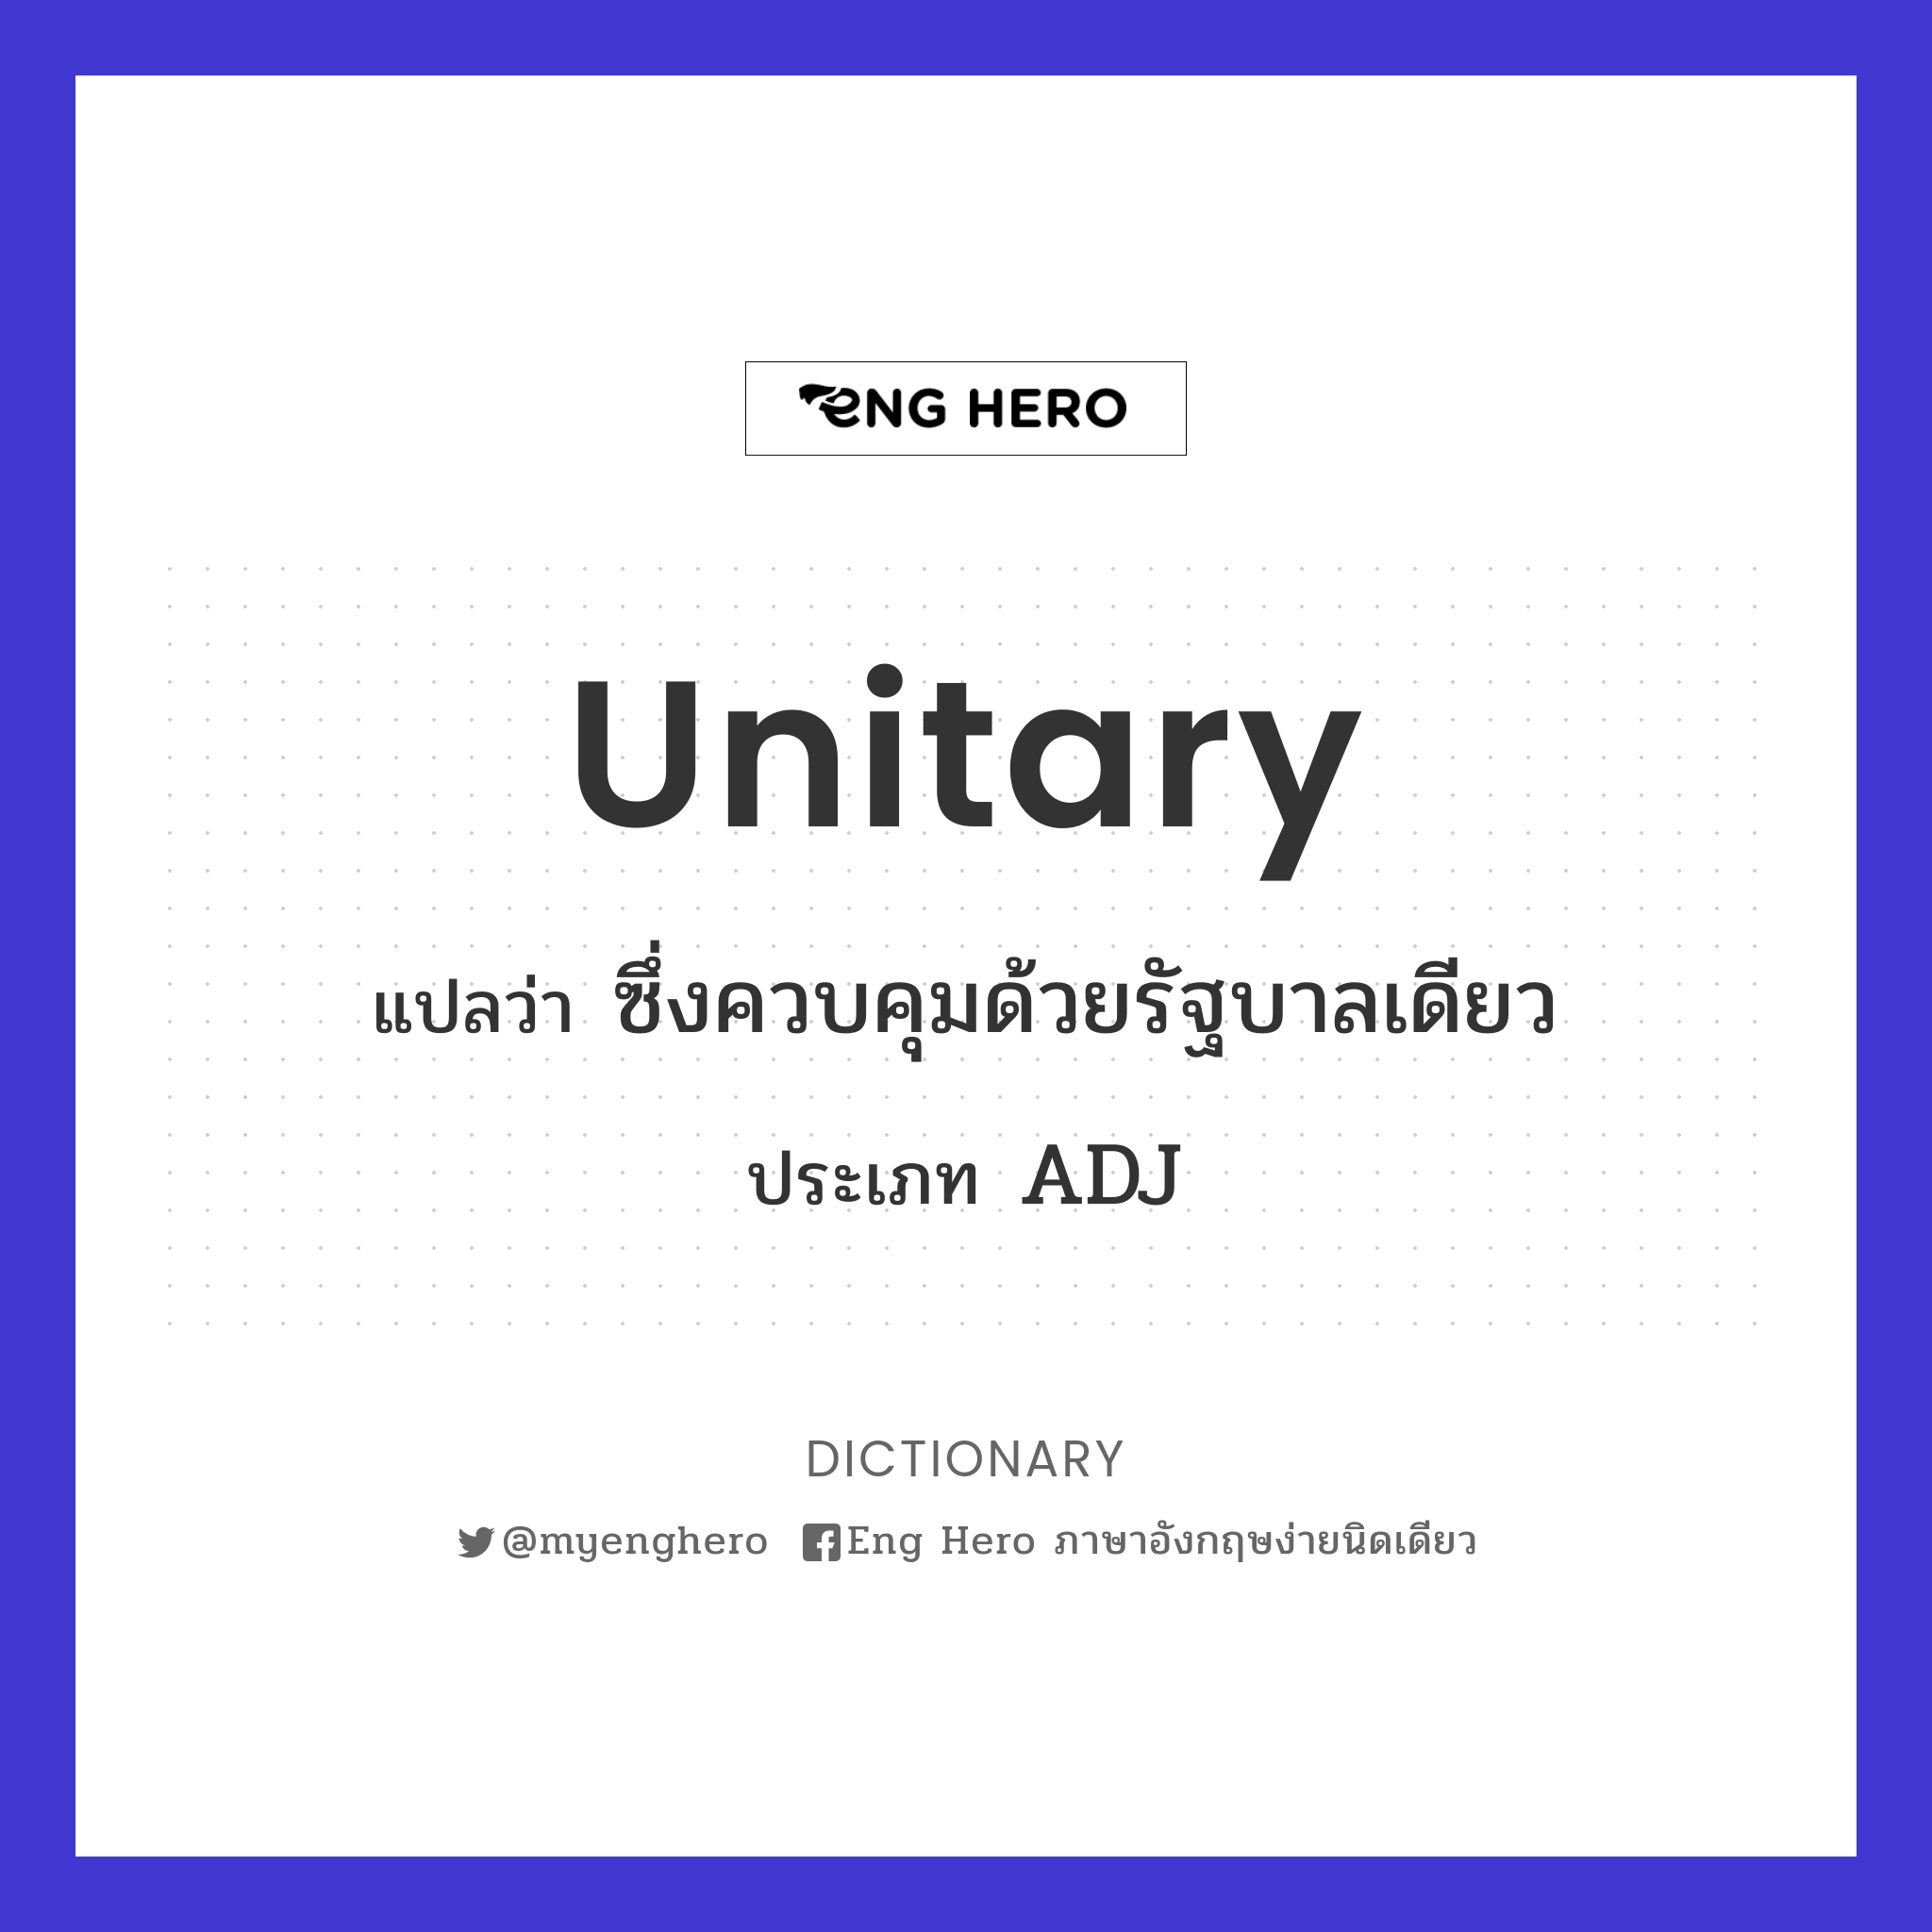 unitary